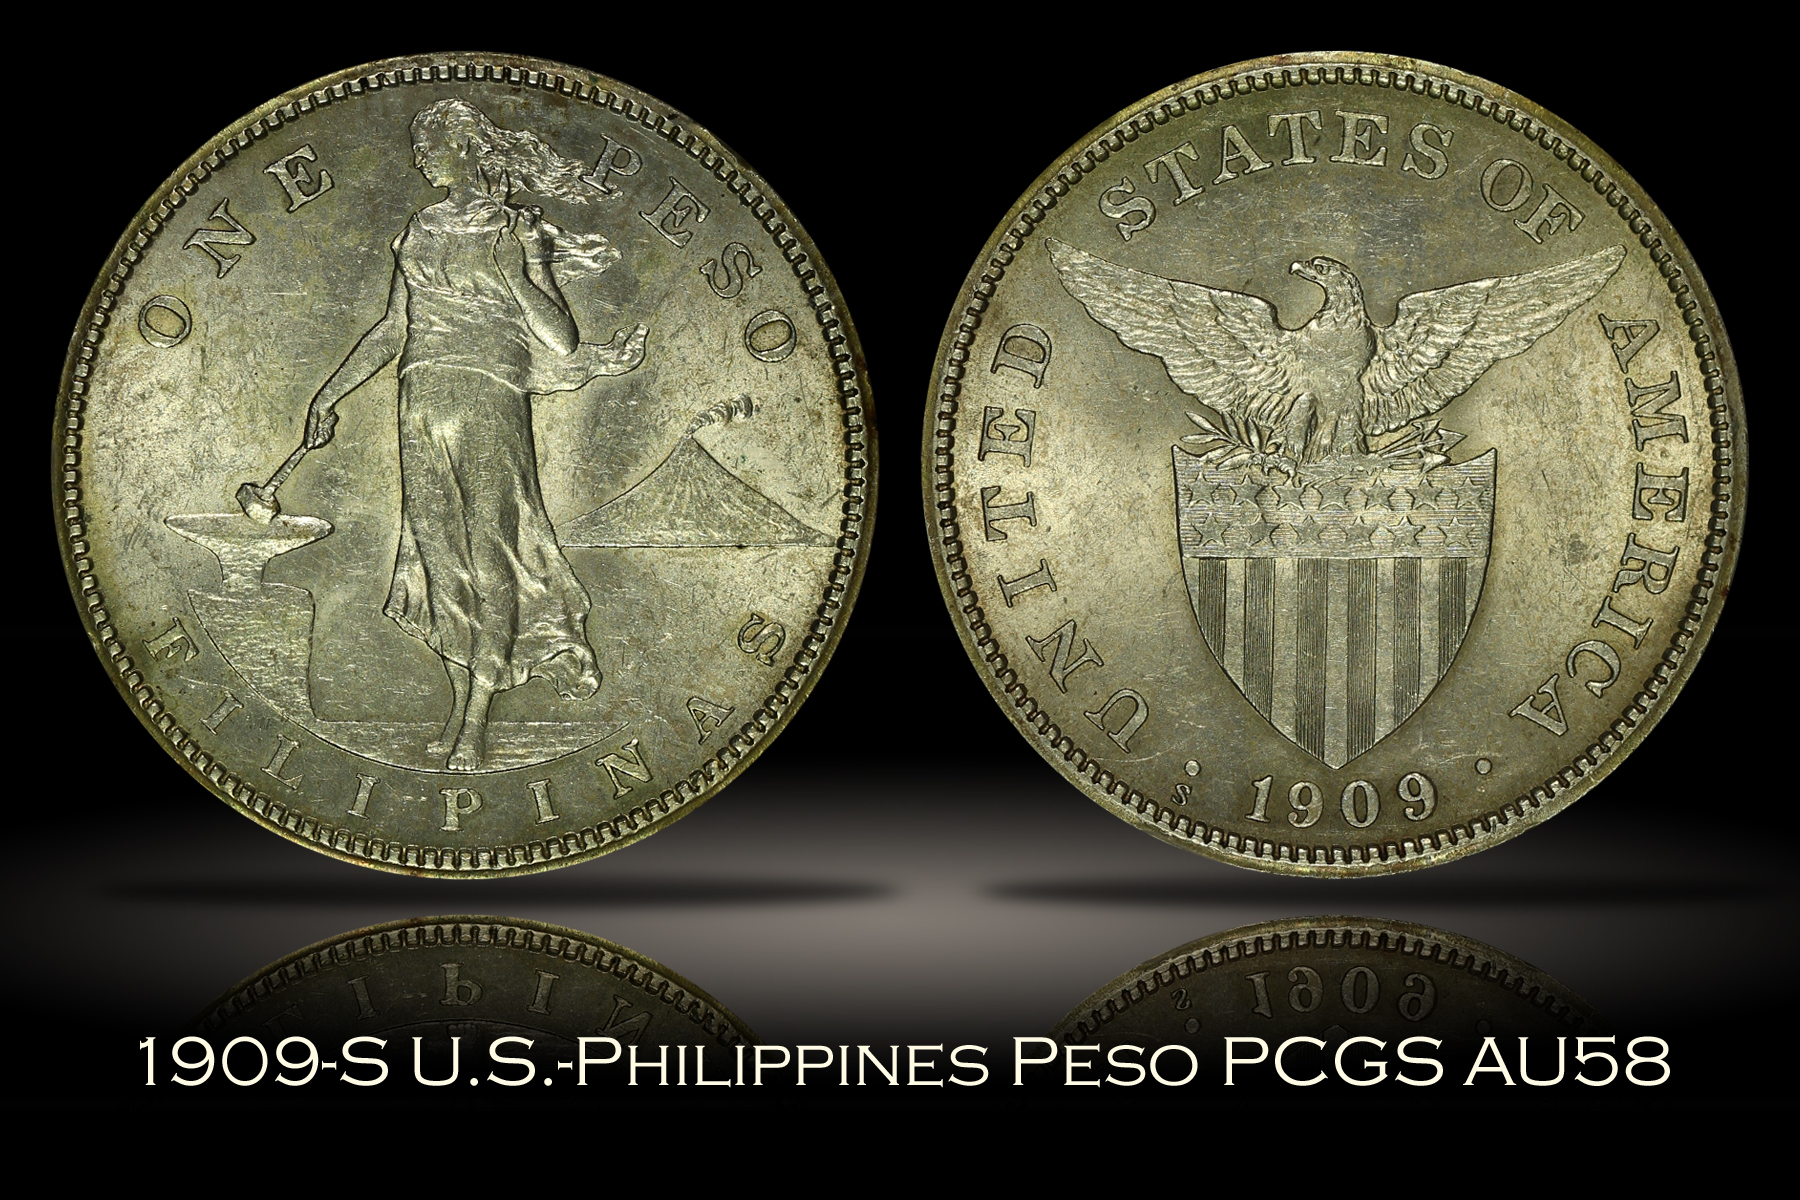 1909-S U.S.-Philippines One Peso PCGS AU58